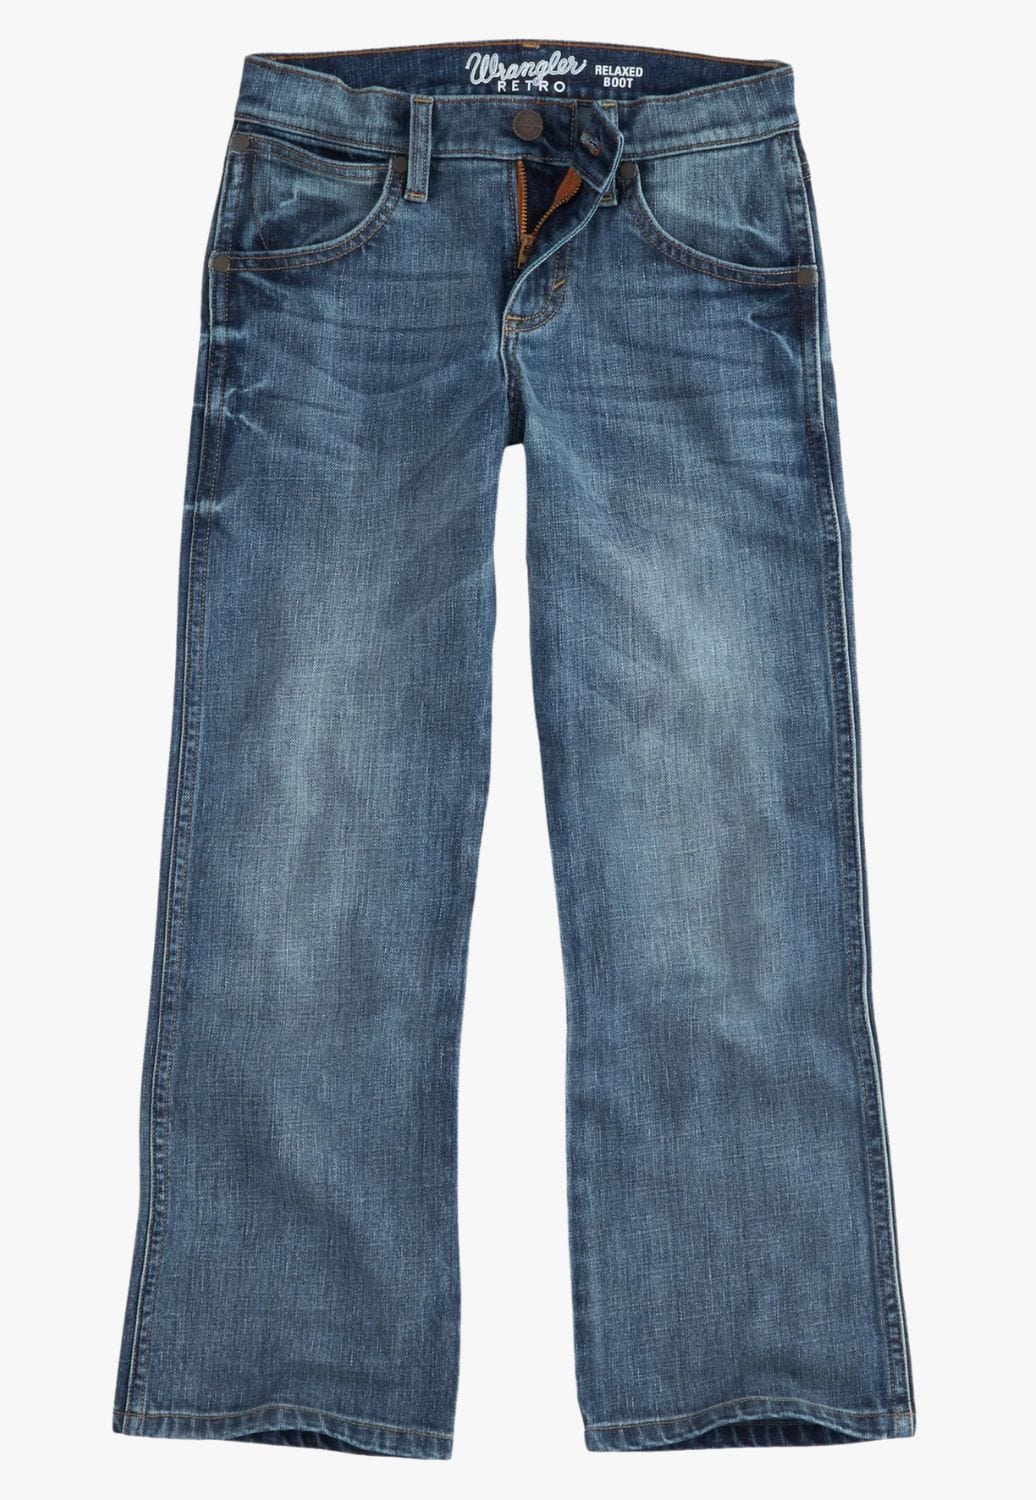 Wrangler Boys Retro Relaxed Bootcut Jeans (Vintage Wash)